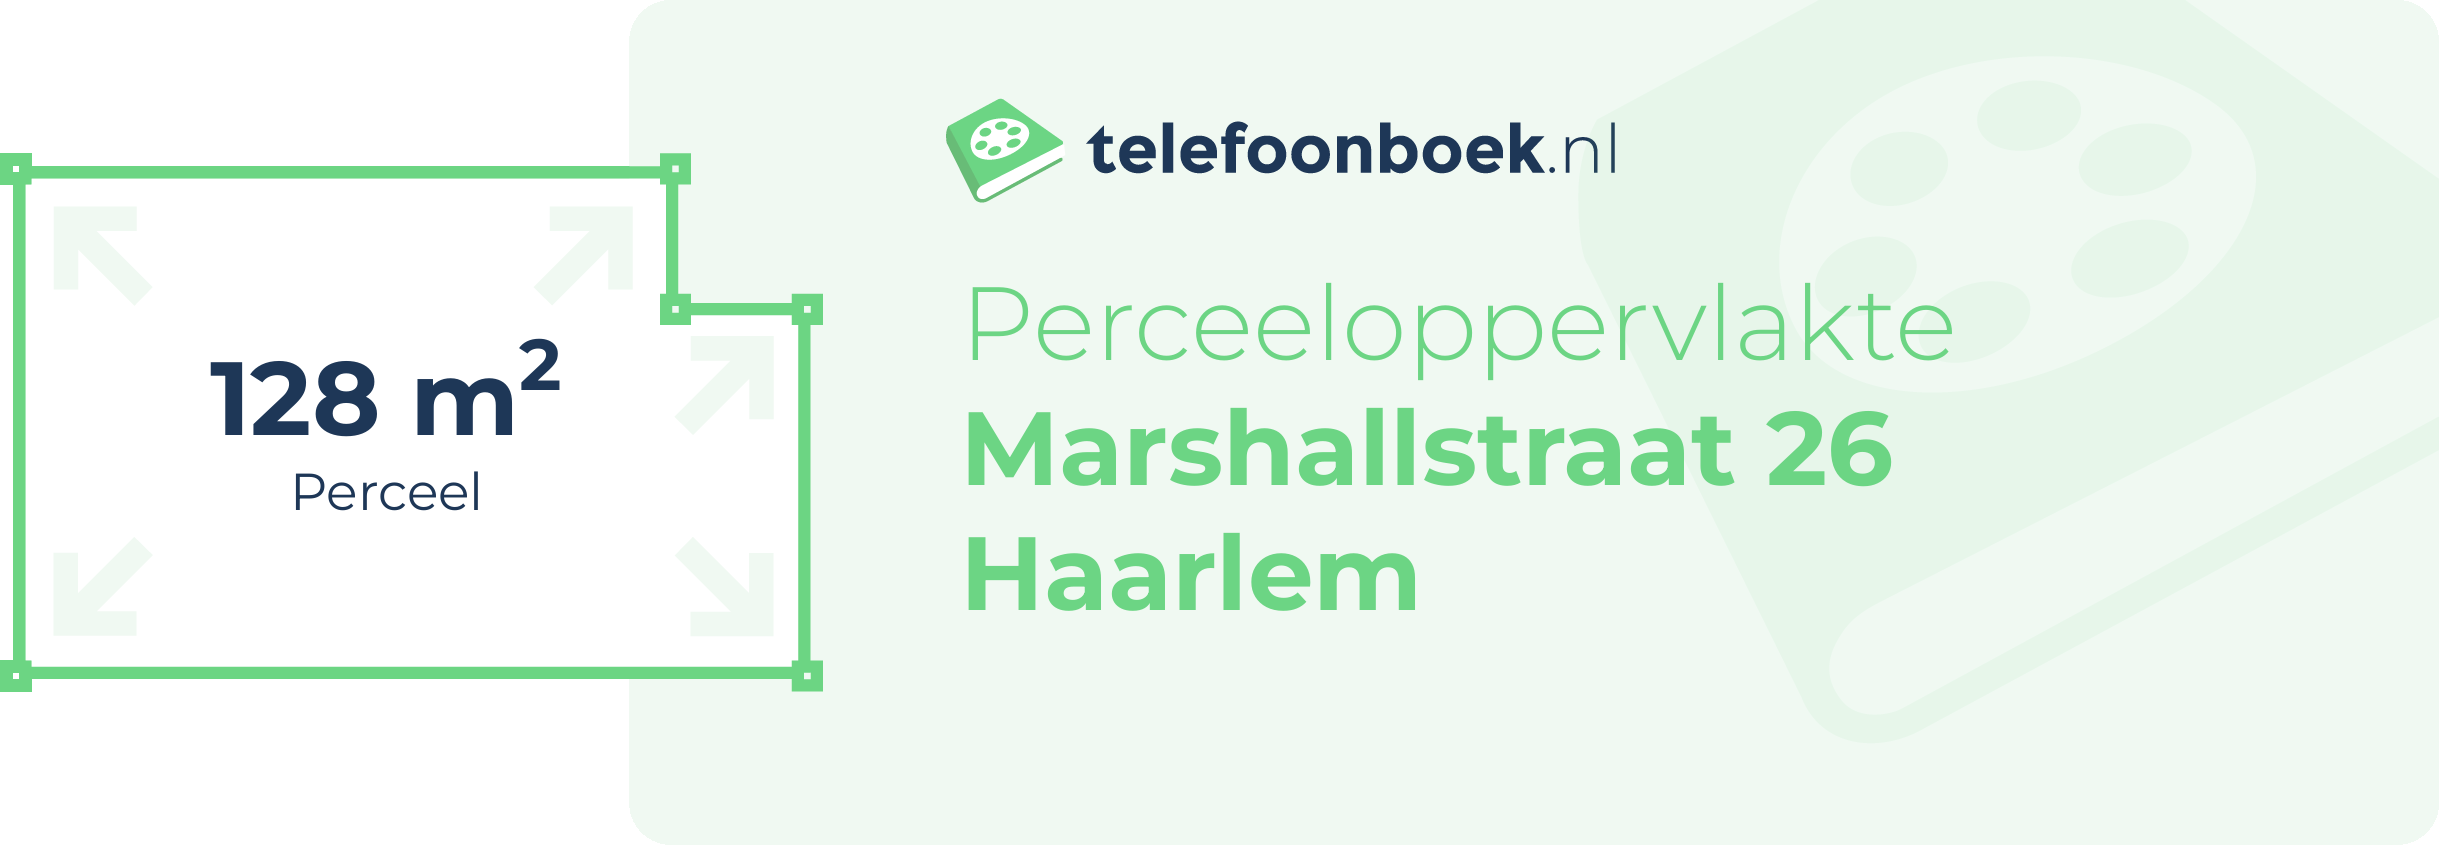 Perceeloppervlakte Marshallstraat 26 Haarlem